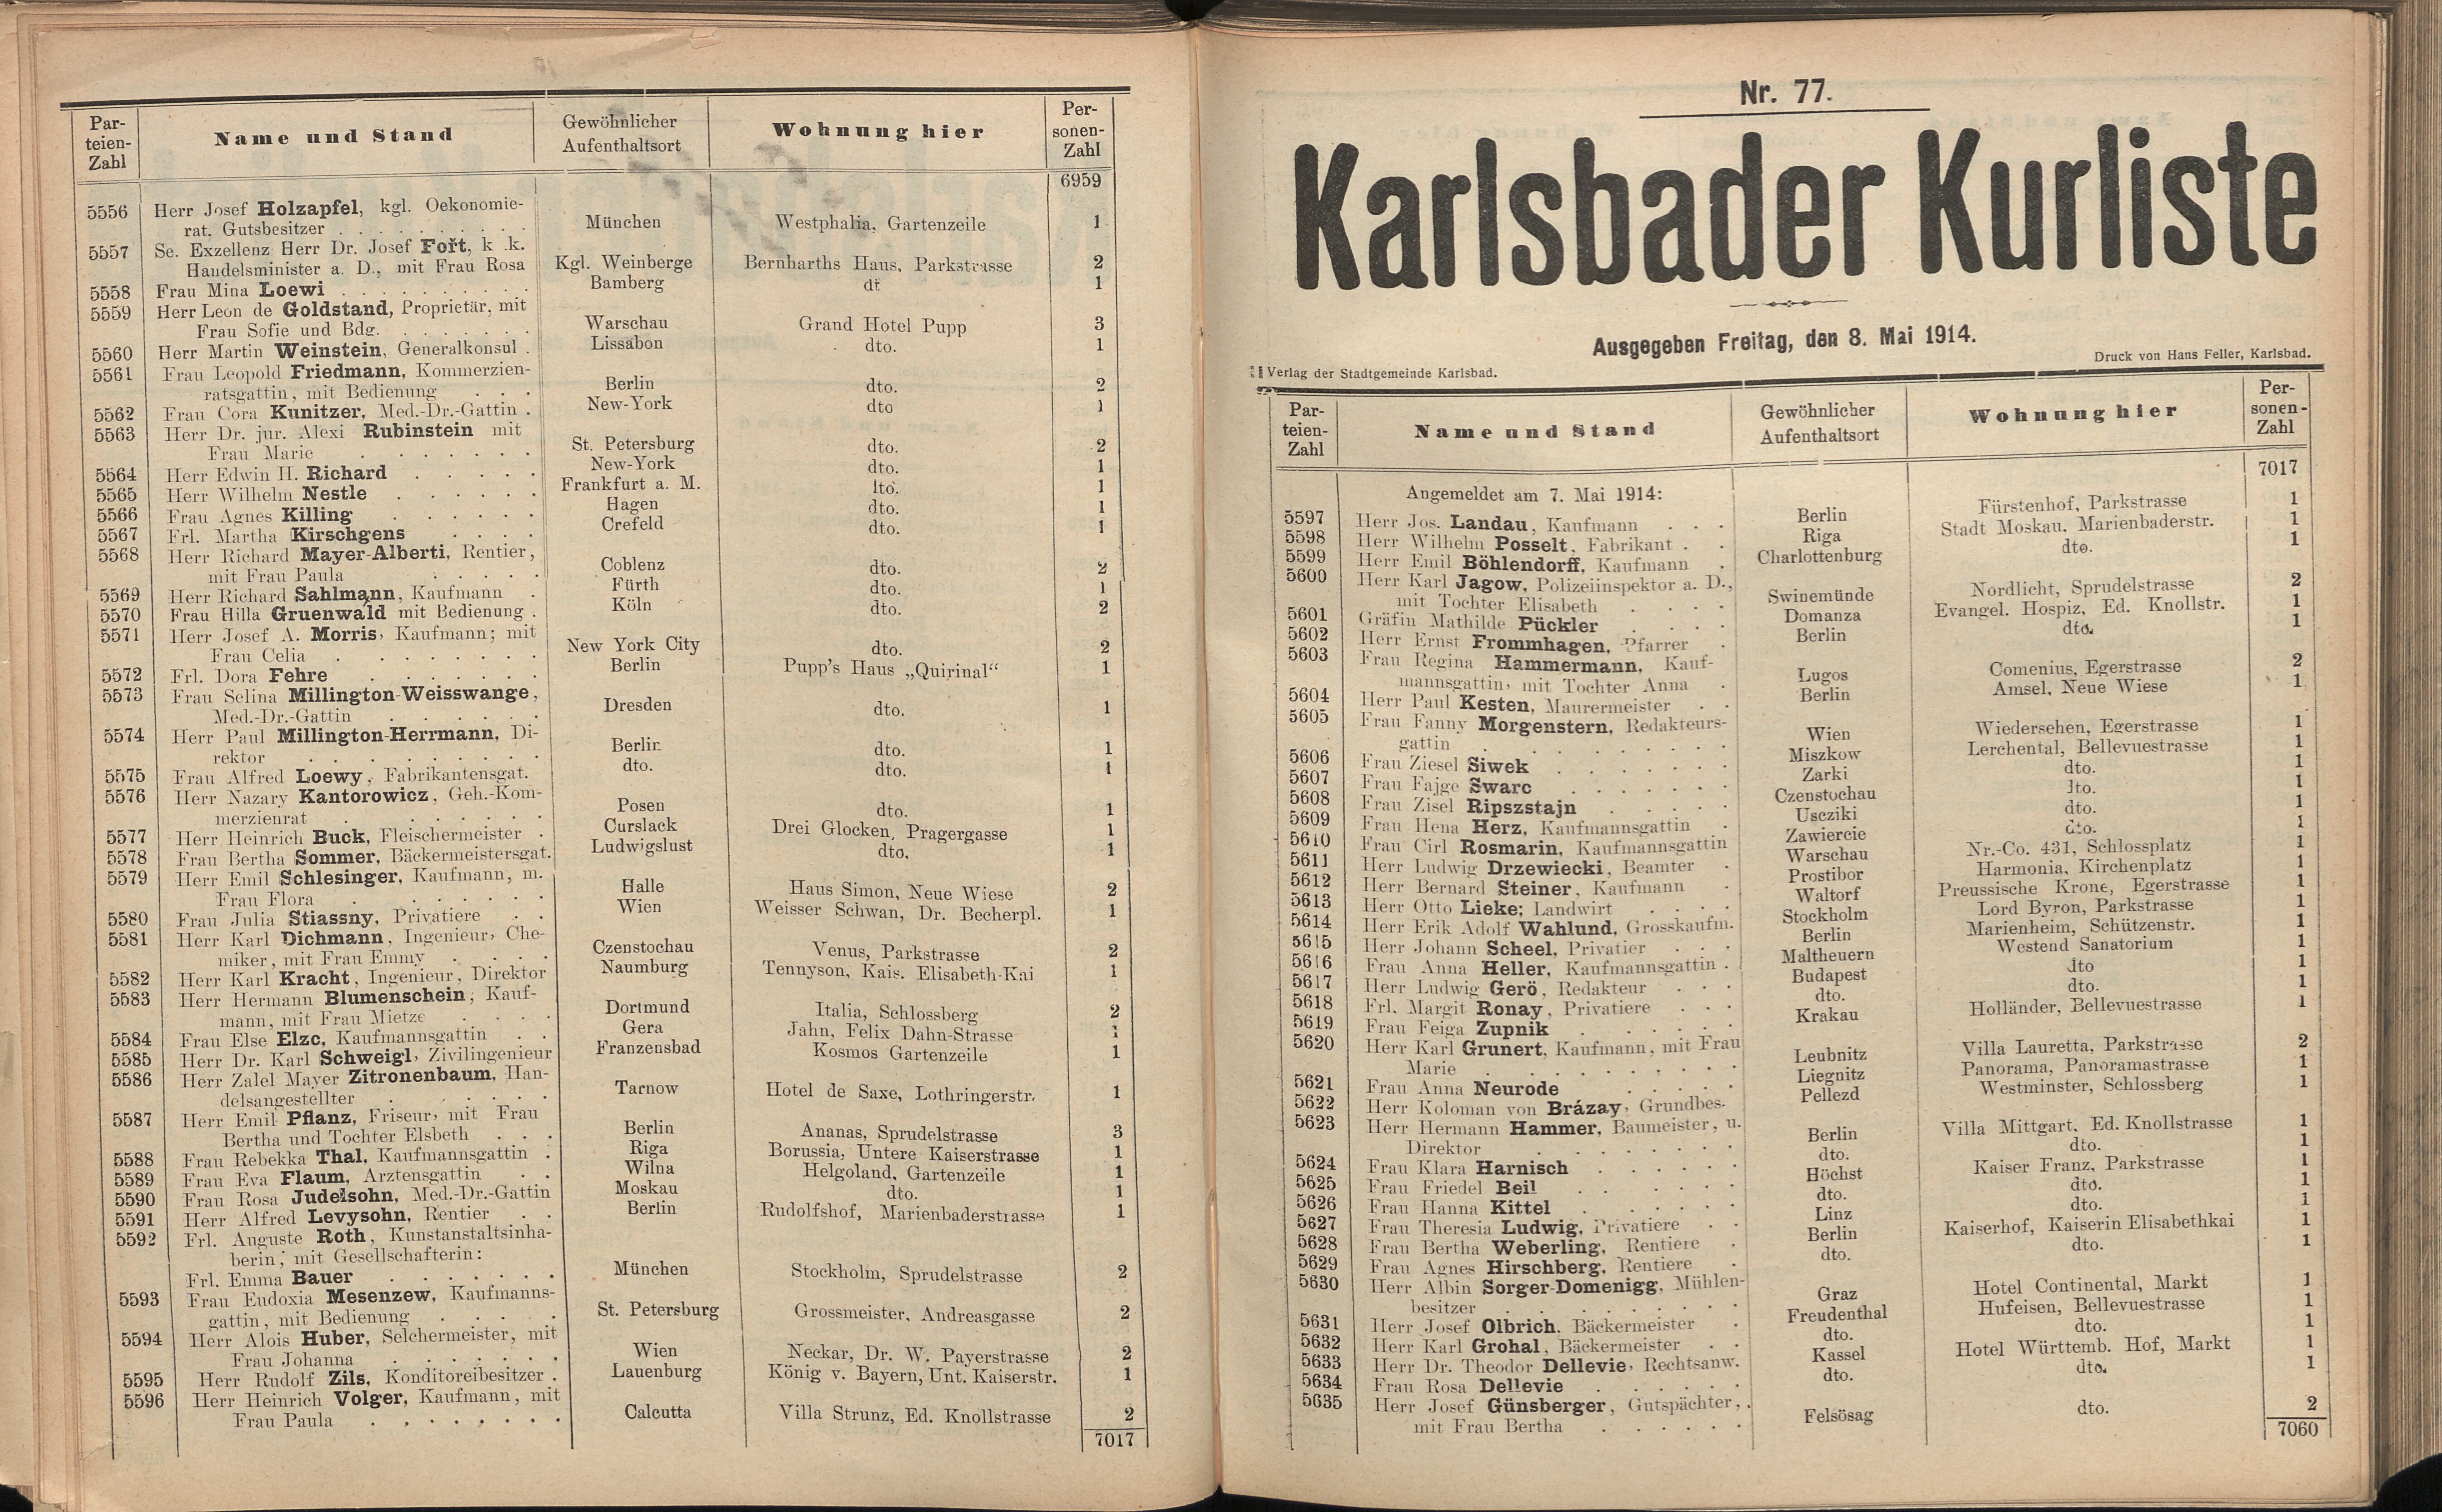 159. soap-kv_knihovna_karlsbader-kurliste-1914_1590